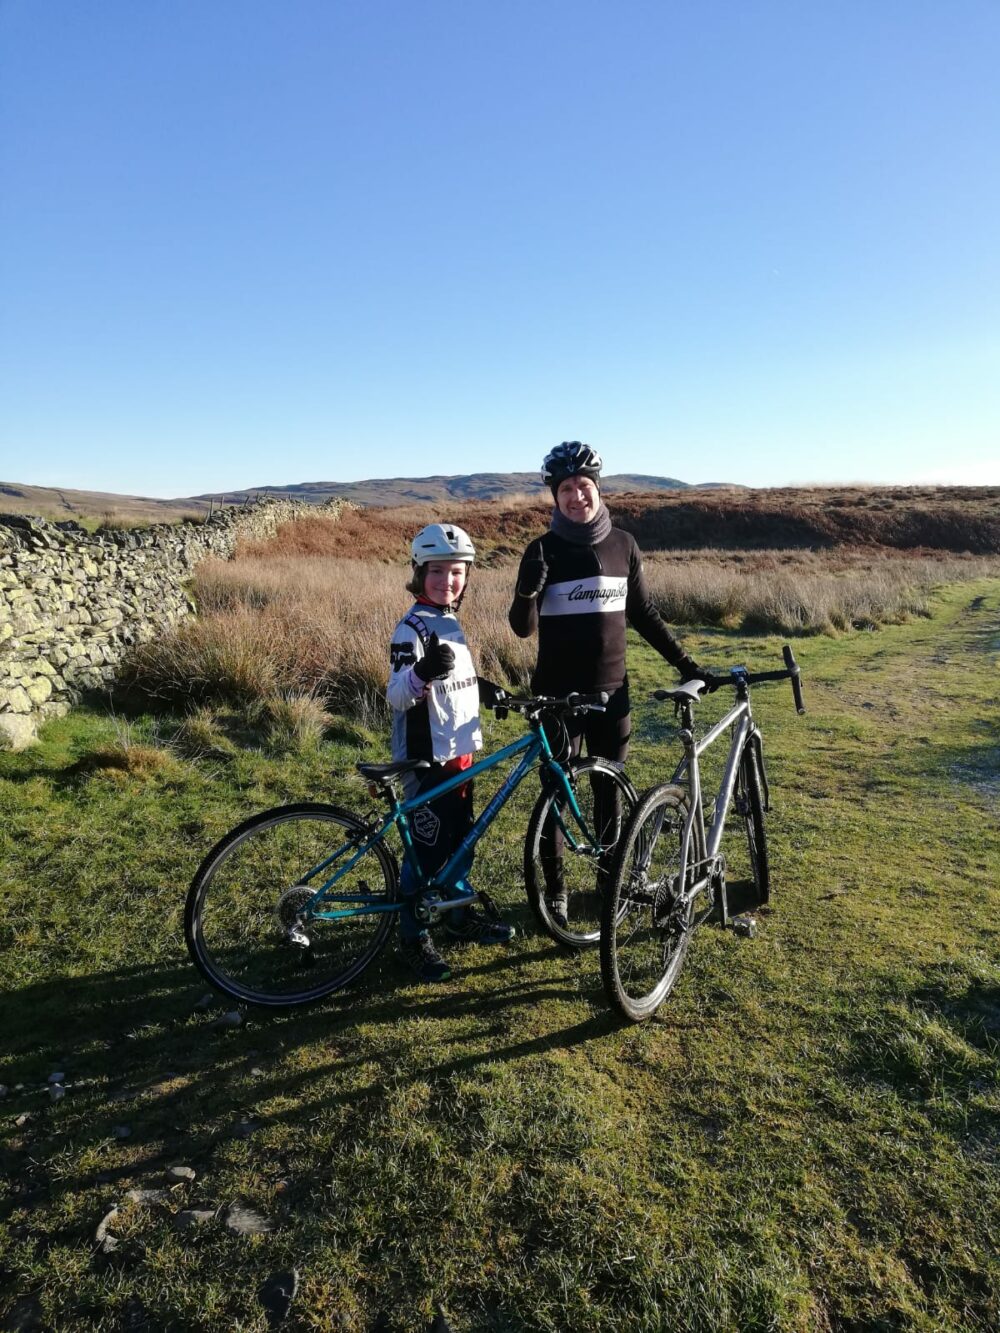 Islabikes Beinn 27 kids bike review - using the bike for mountain biking with 9 year old in Cumbria